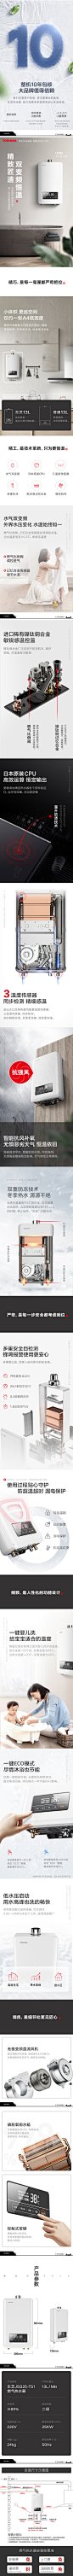 Toshiba_东芝-JSQ25-TS1-13L恒温防冻燃气热水器家用天然气强排-tmall